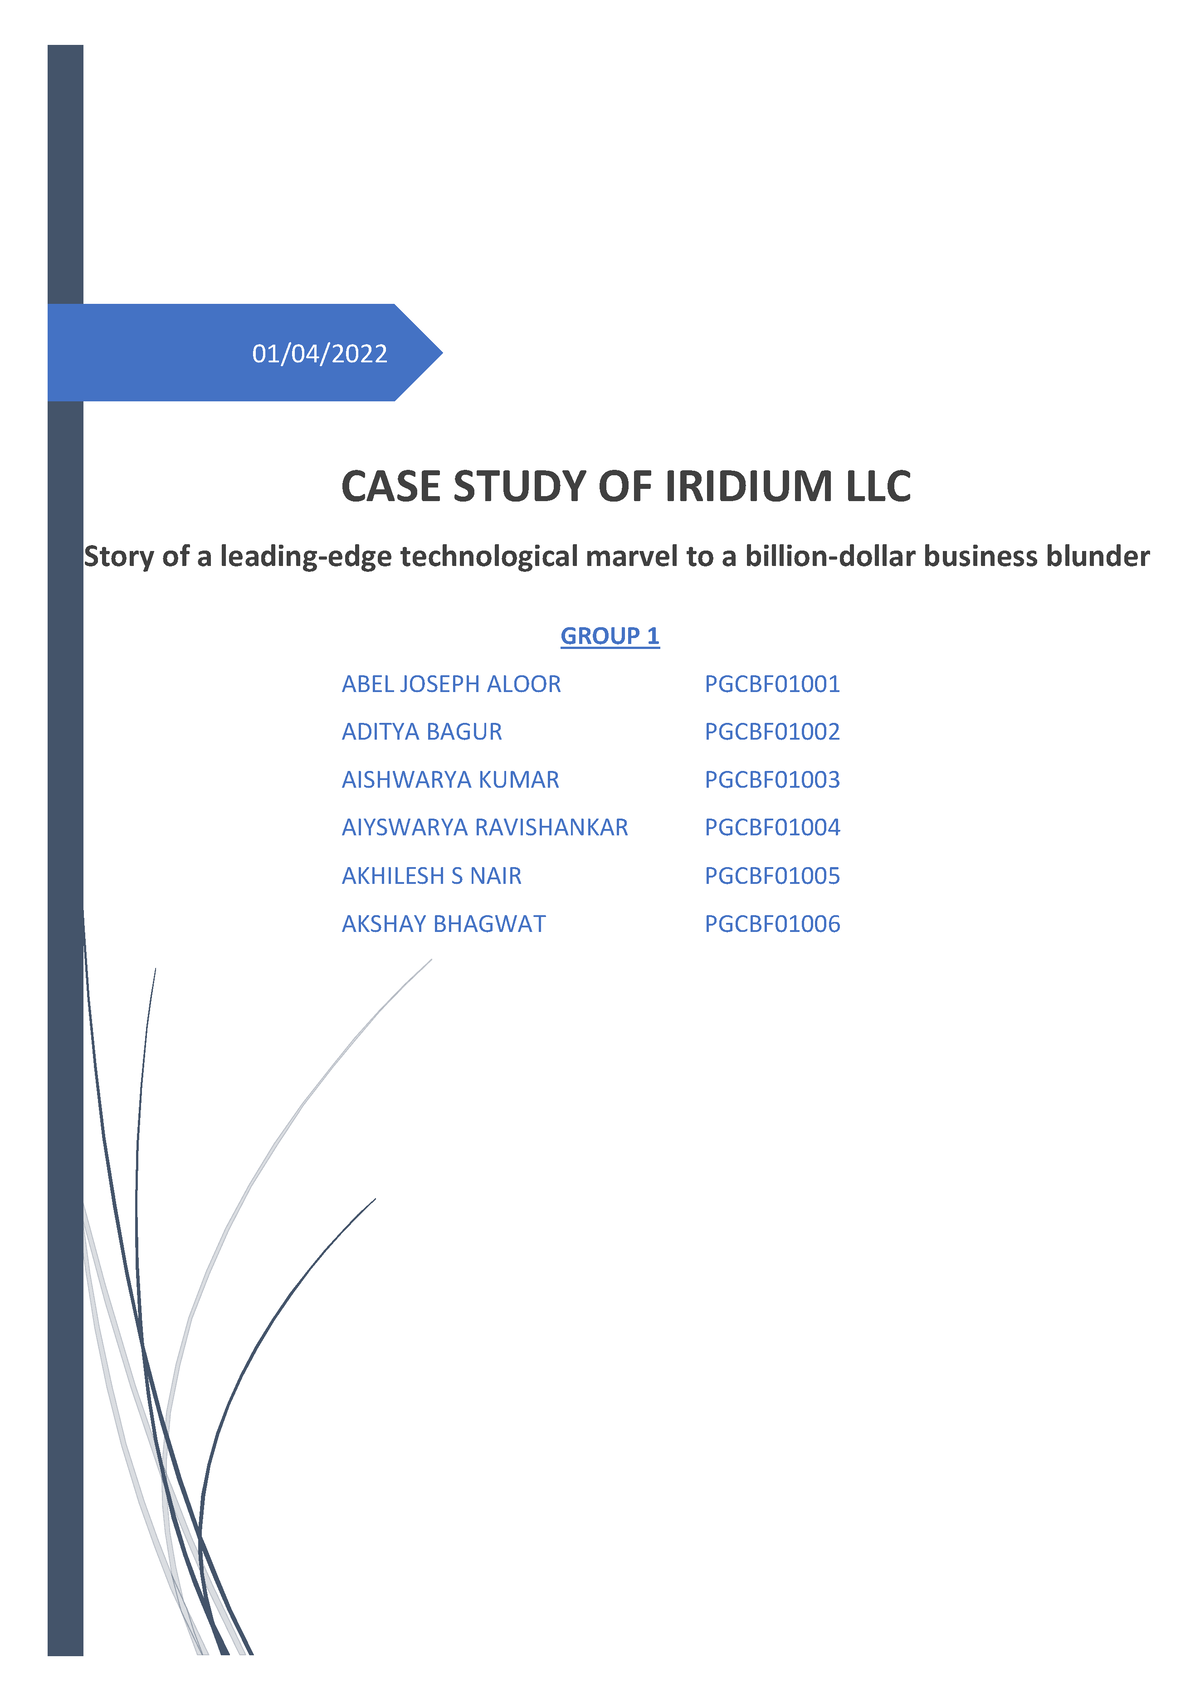 iridium llc case study solution